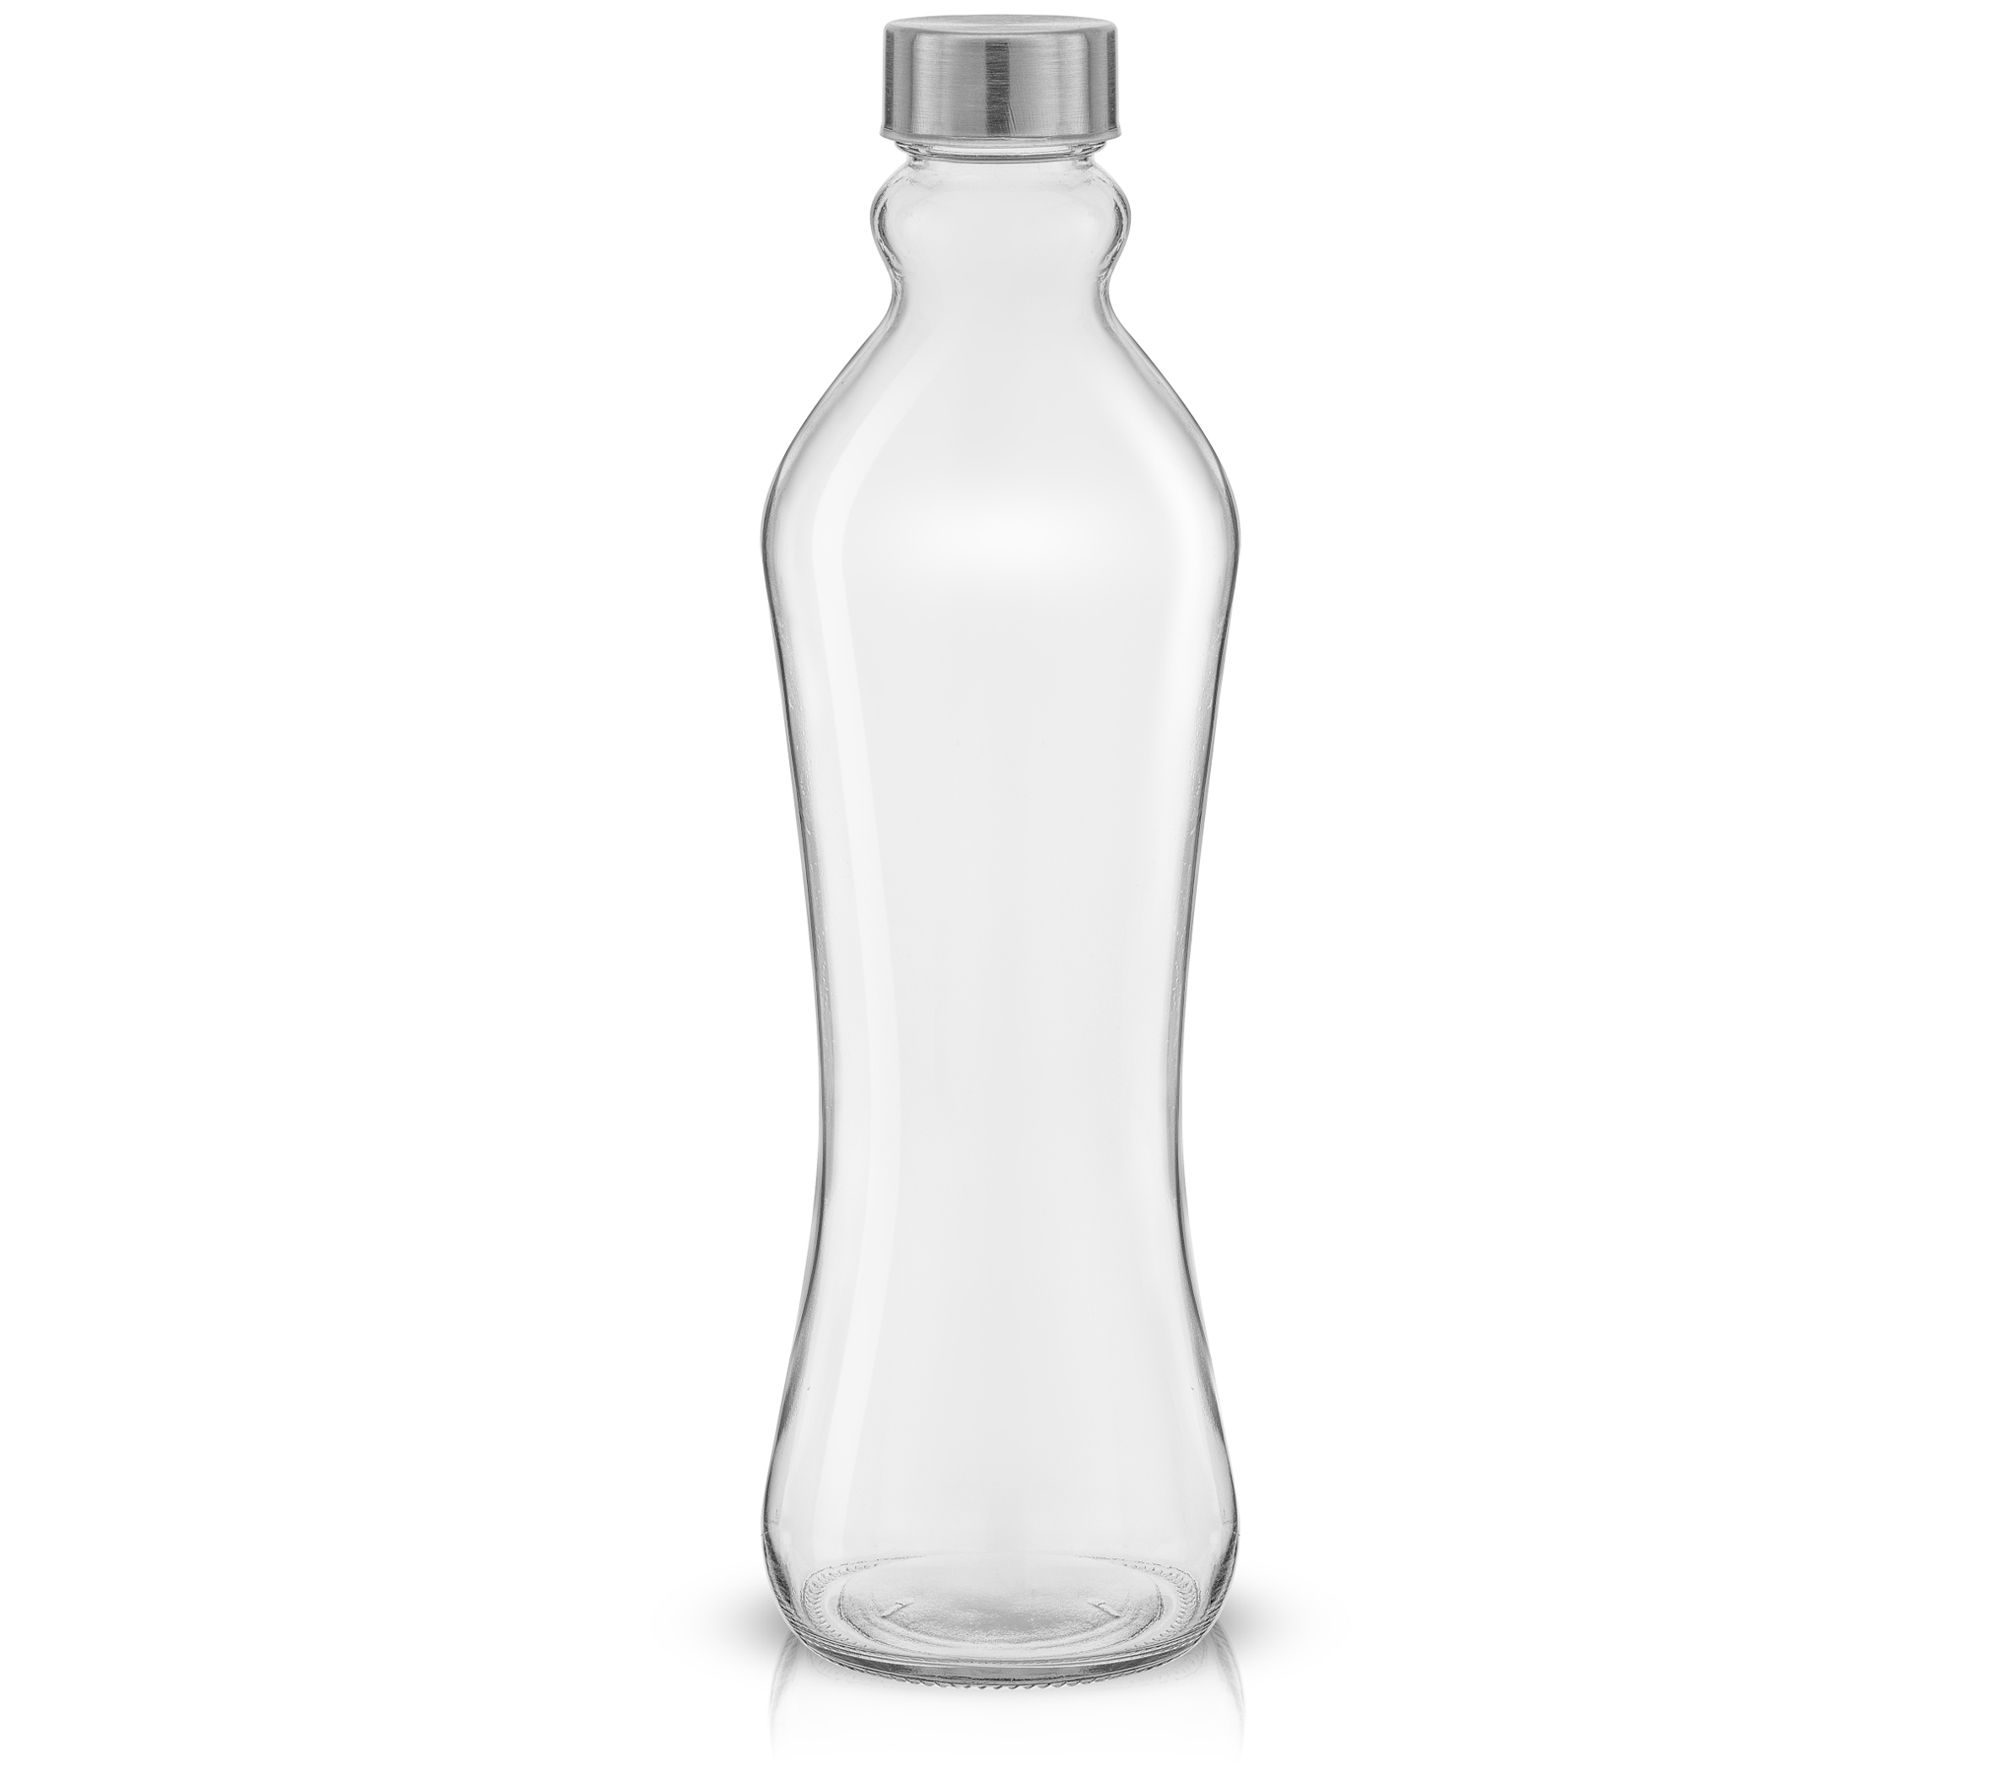 JoyJolt Spring Glass Fluted Water Bottles with Stainless Steel Cap - 18 oz  Glass Juice Bottles - Set of 6